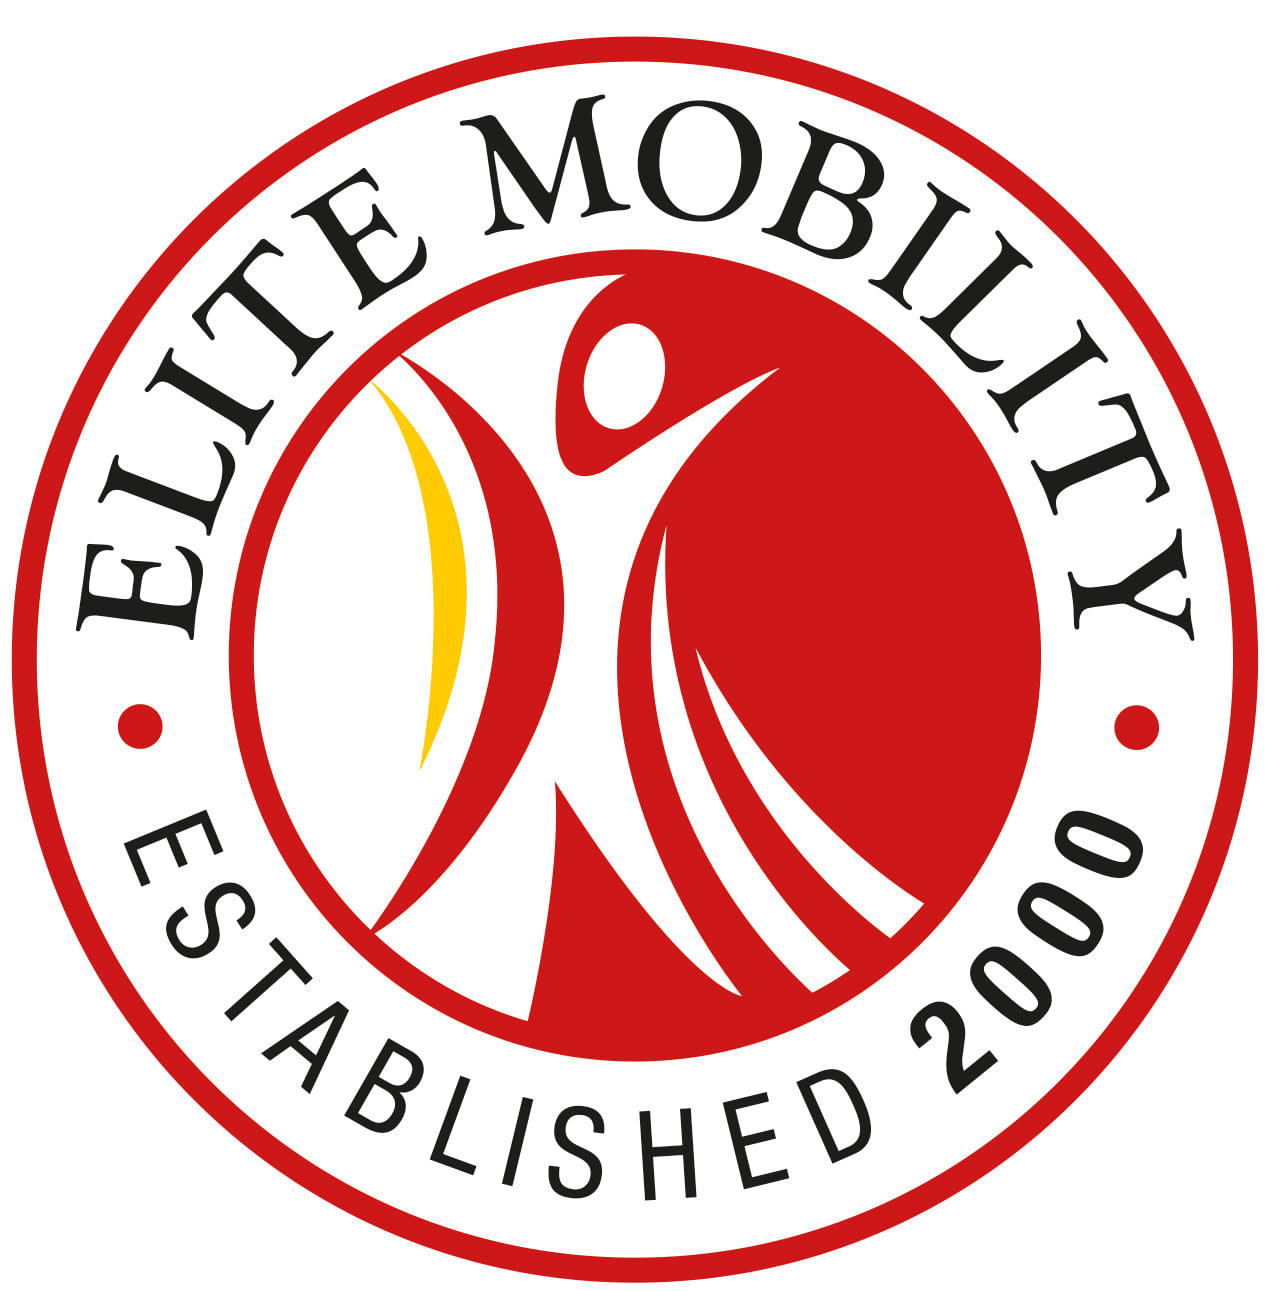 Elite Mobility Bristol 08001 695910